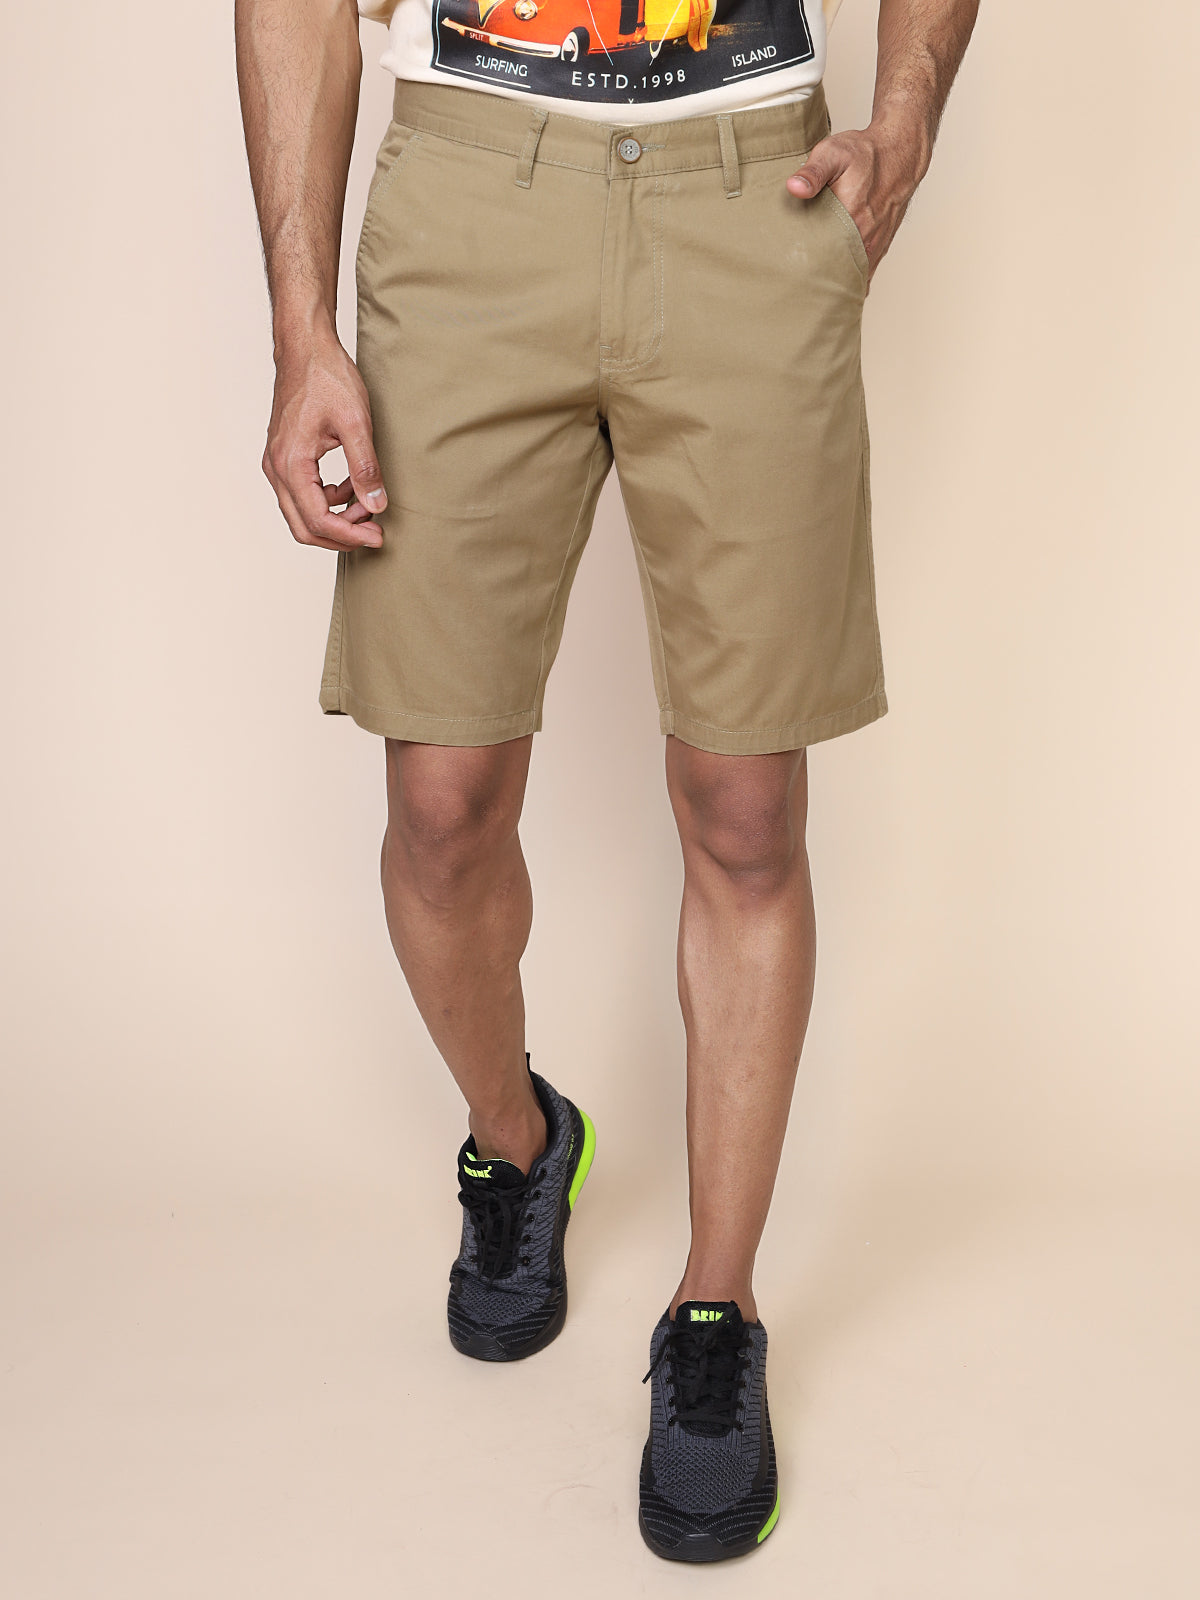 Black Mens Shorts with Zip Pocket  Perfect Fit  Stylish  Soft Cotton  Nicker  Men Bermuda Half Pants  Running  Jogging  Casual Wear   Loungewear  Sportswear  Active Shorts for Men  Boys